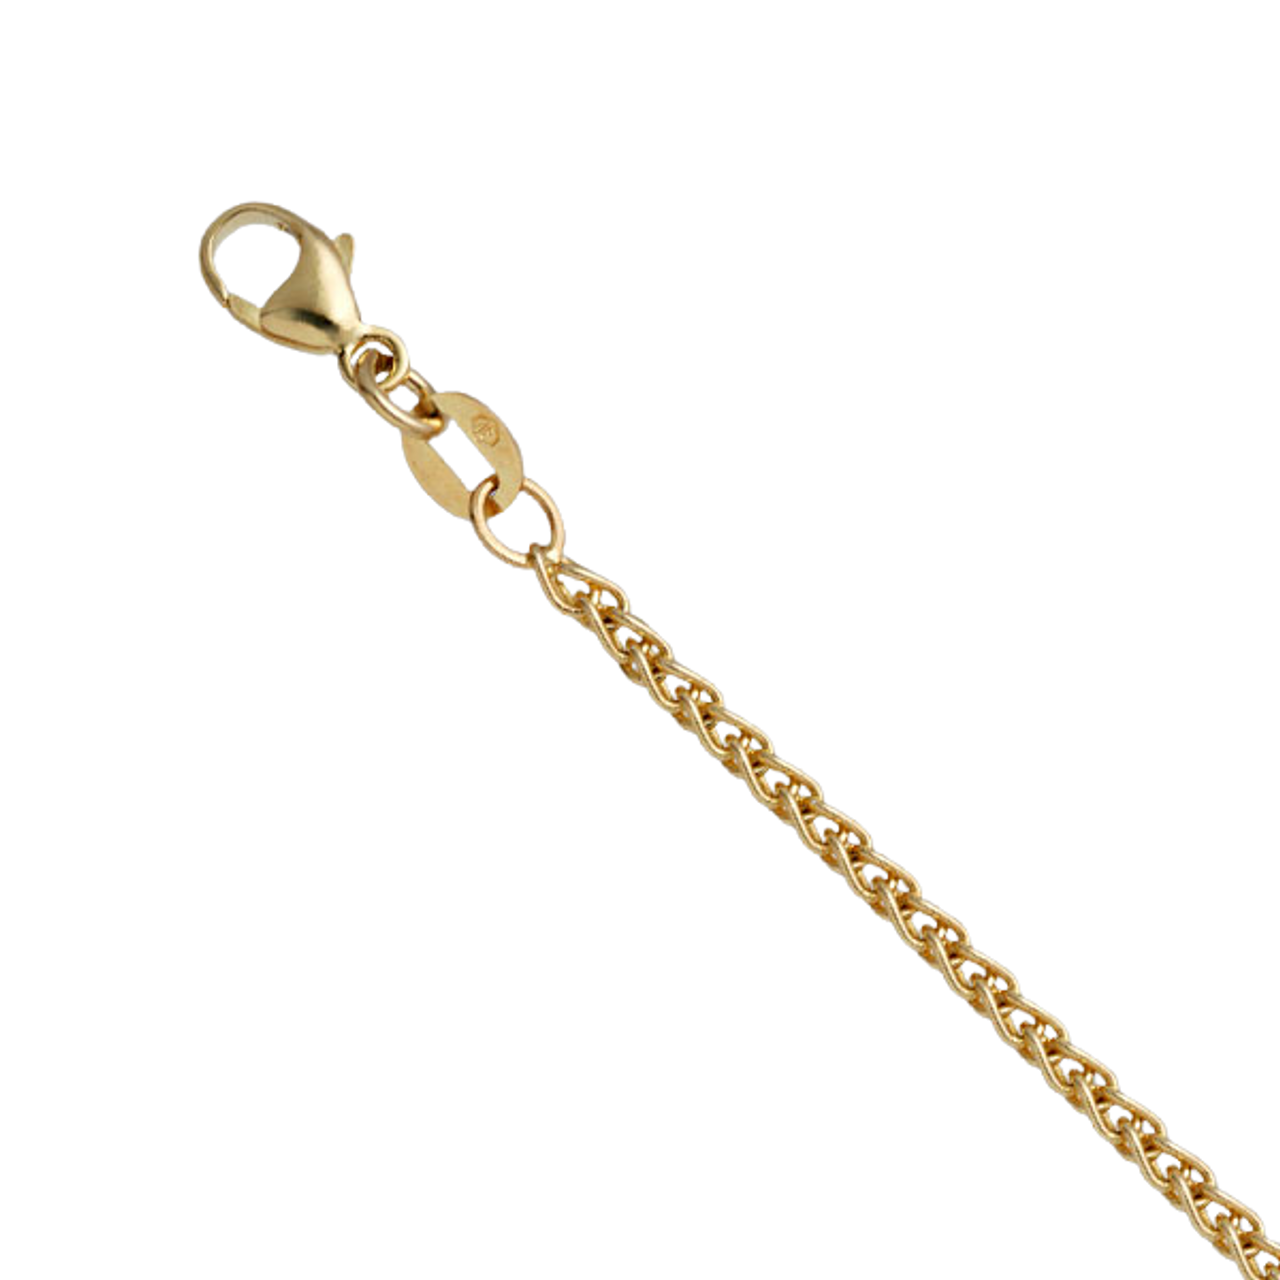 4mm 14kt Yellow Gold Wheat-Chain Bracelet